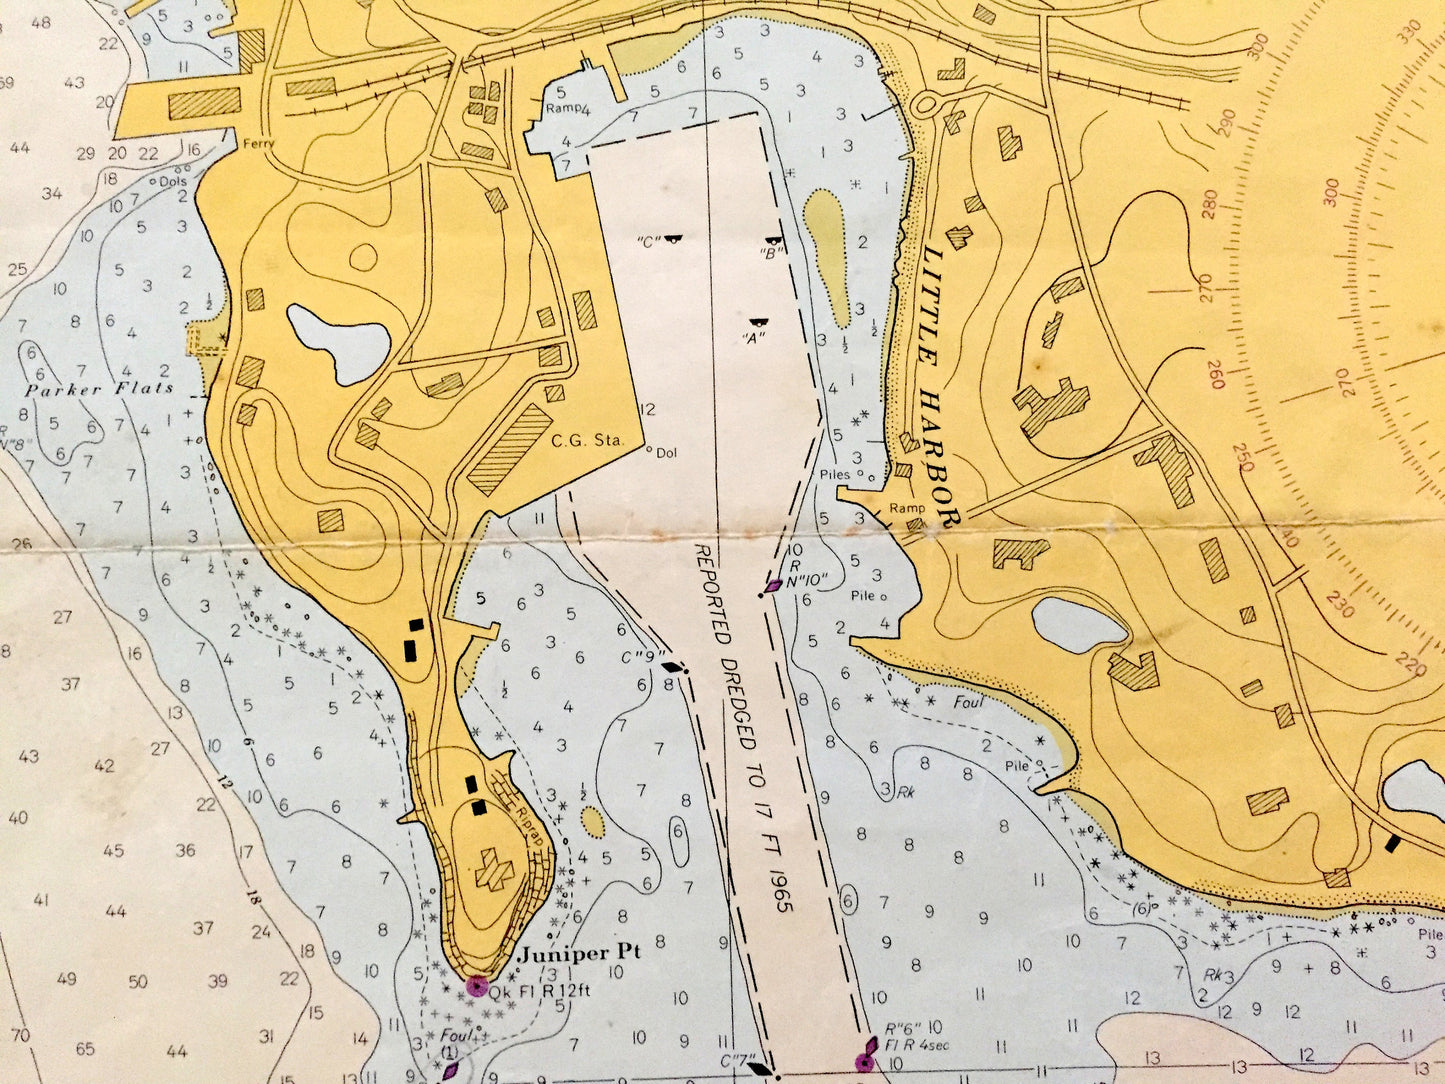 Antique Woods Hole, Massachusetts 1966 US Coast Guard Nautical Map – Falmouth, Cape Cod, Barnstable County, Nobska, Nonamesset Island, MA